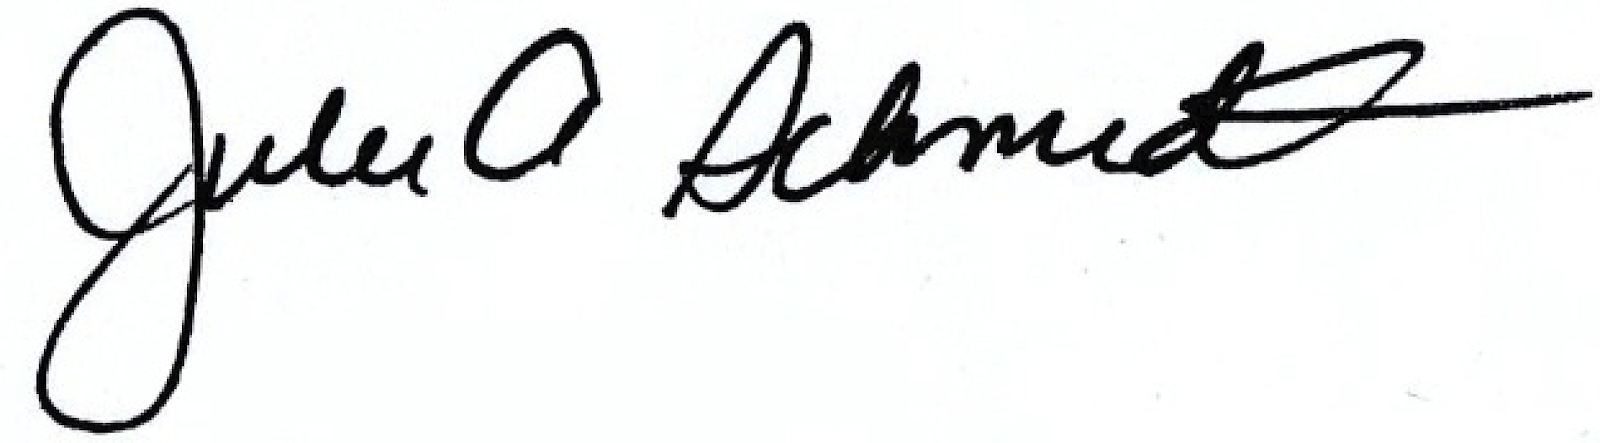 Julie A. Schmidt signature